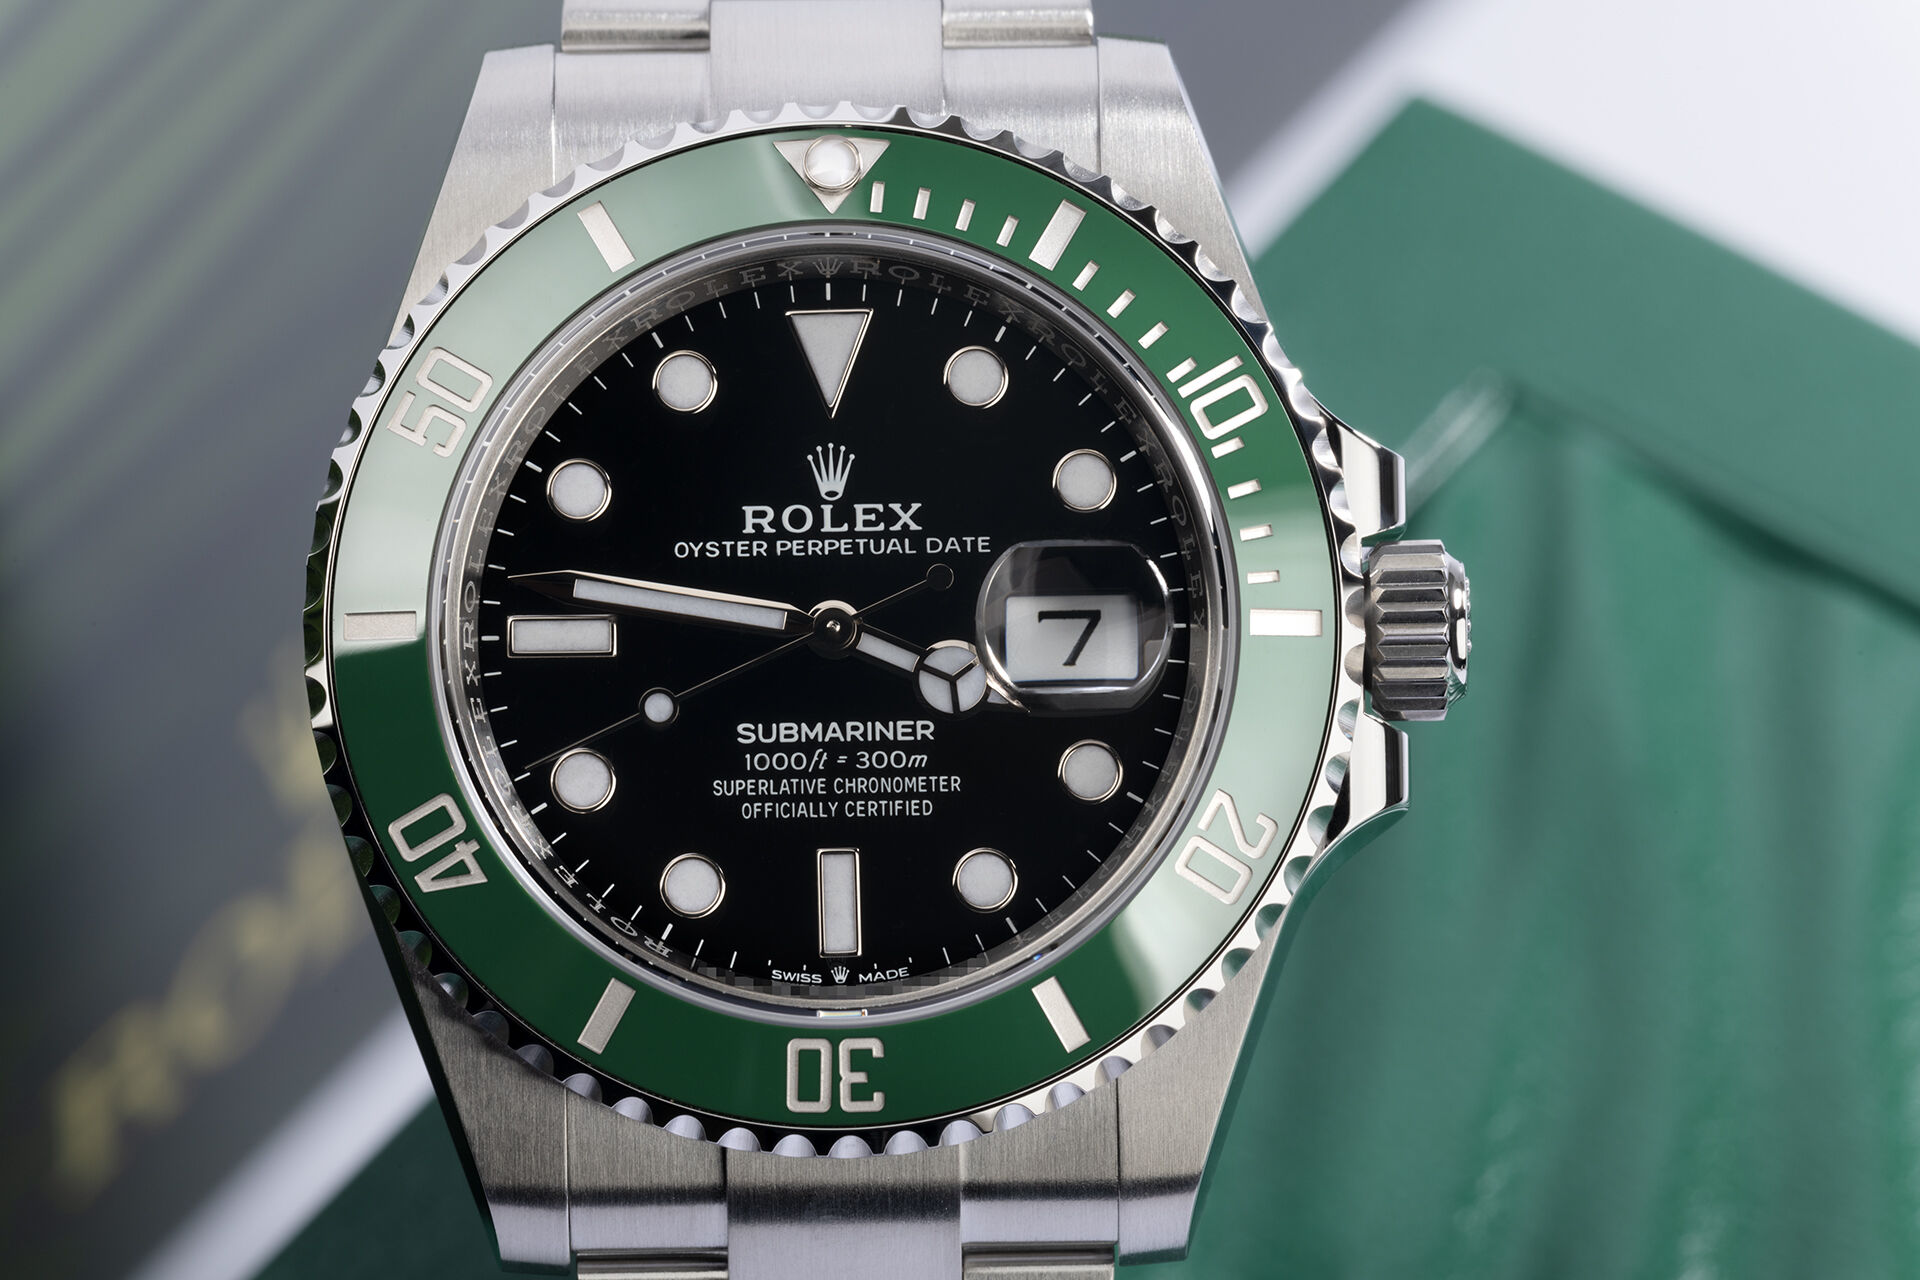 Rolex Submariner Date Watches | ref 126610LV | Brand New - Latest ...